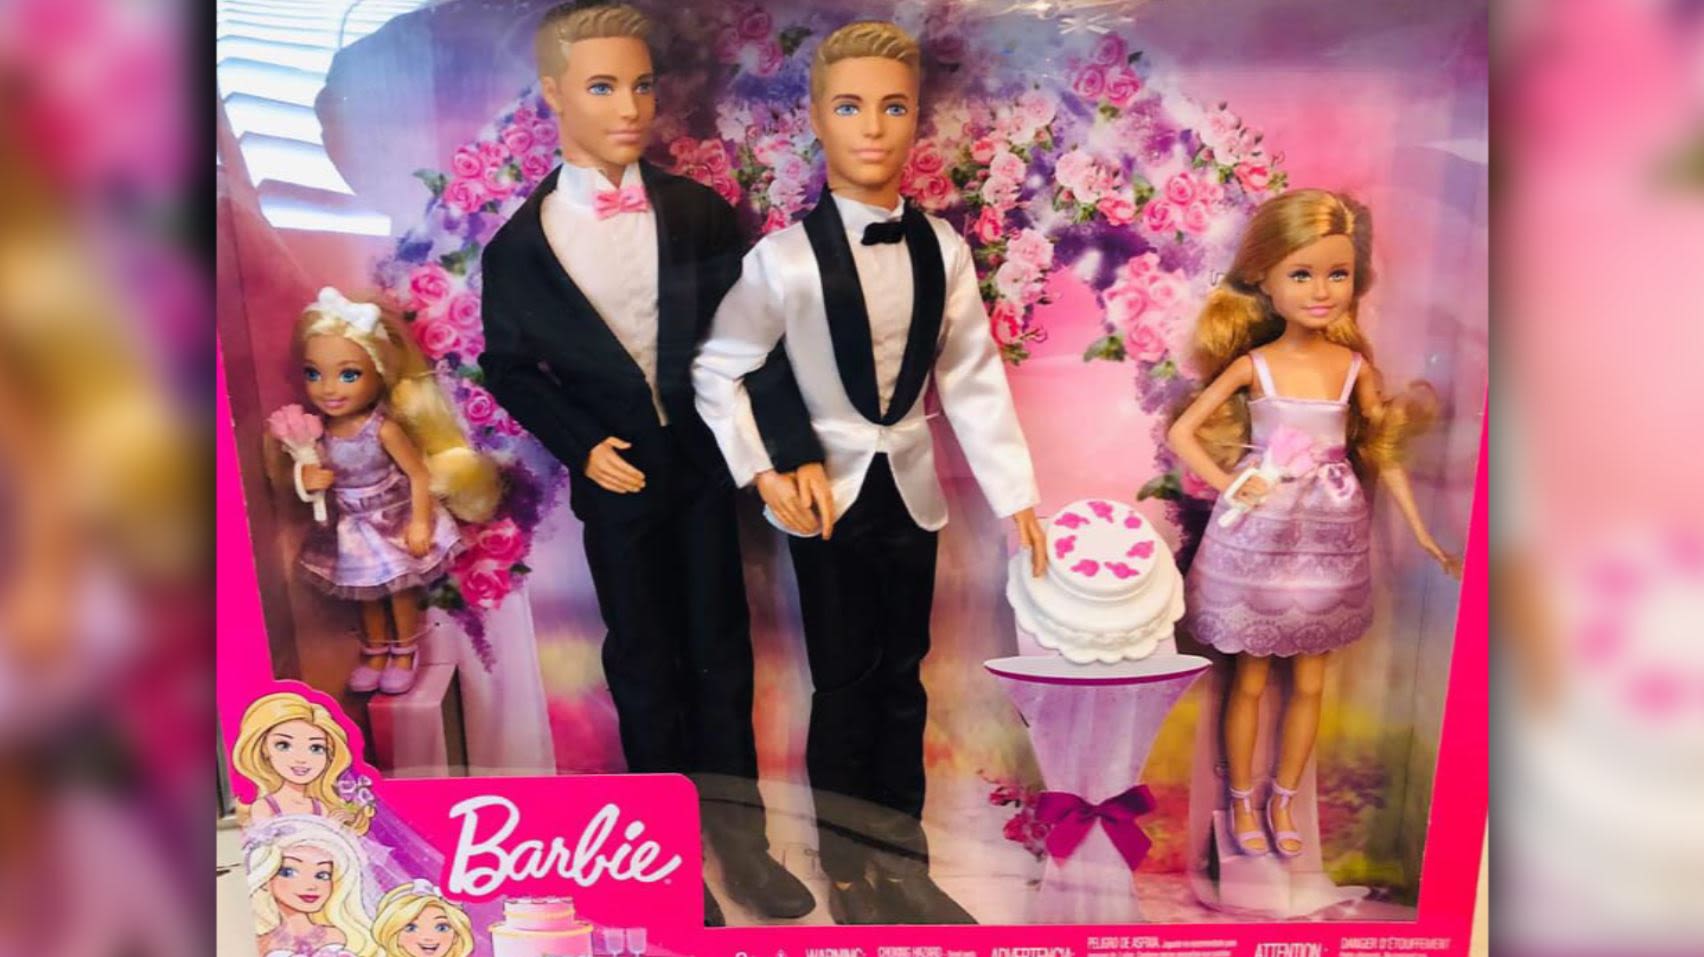 ken and barbie wedding dolls